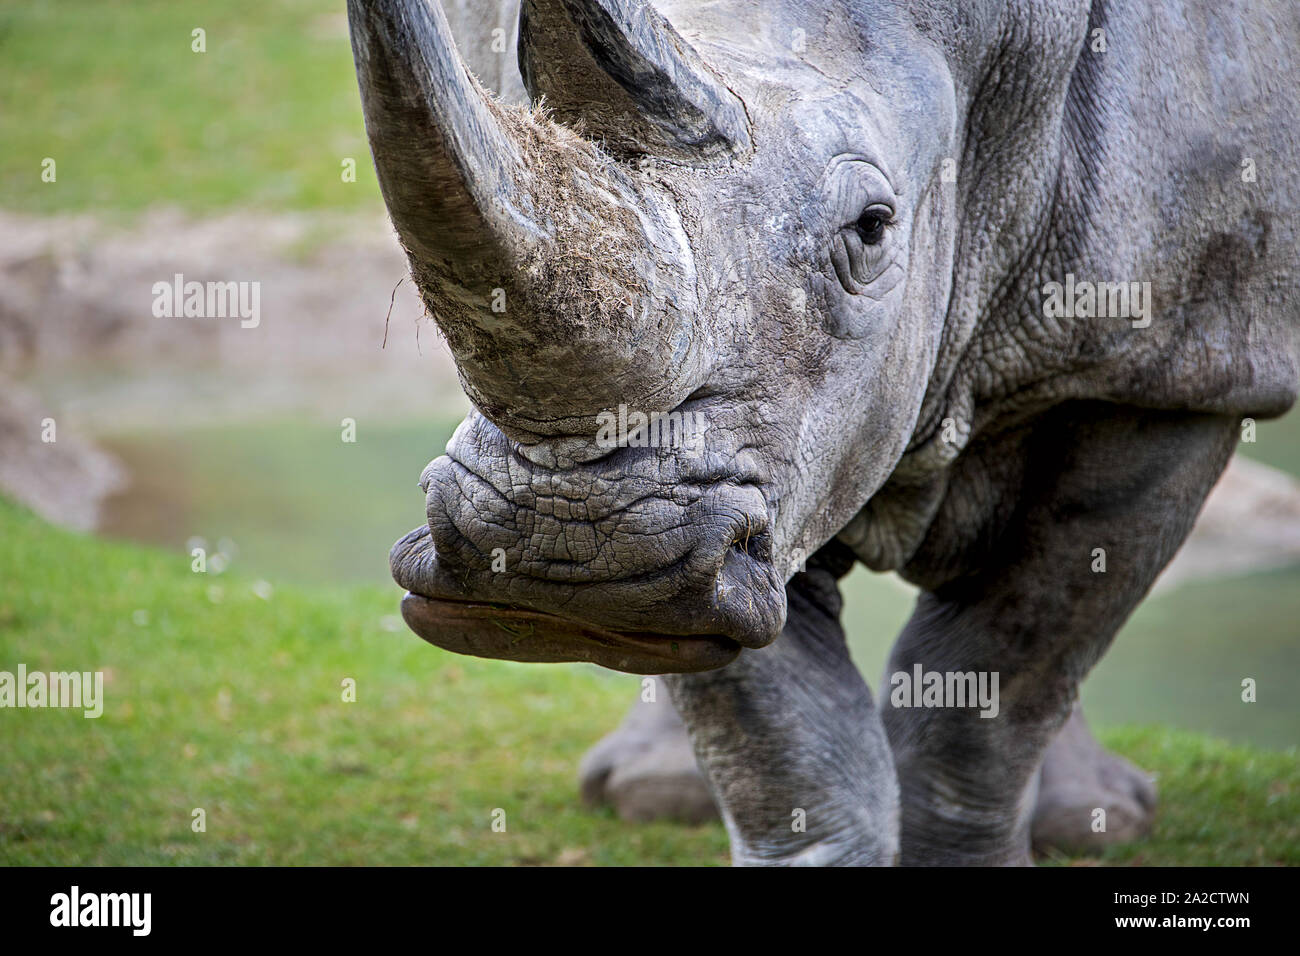 closeup of a rhinoceros head, a powerful animal Stock Photo